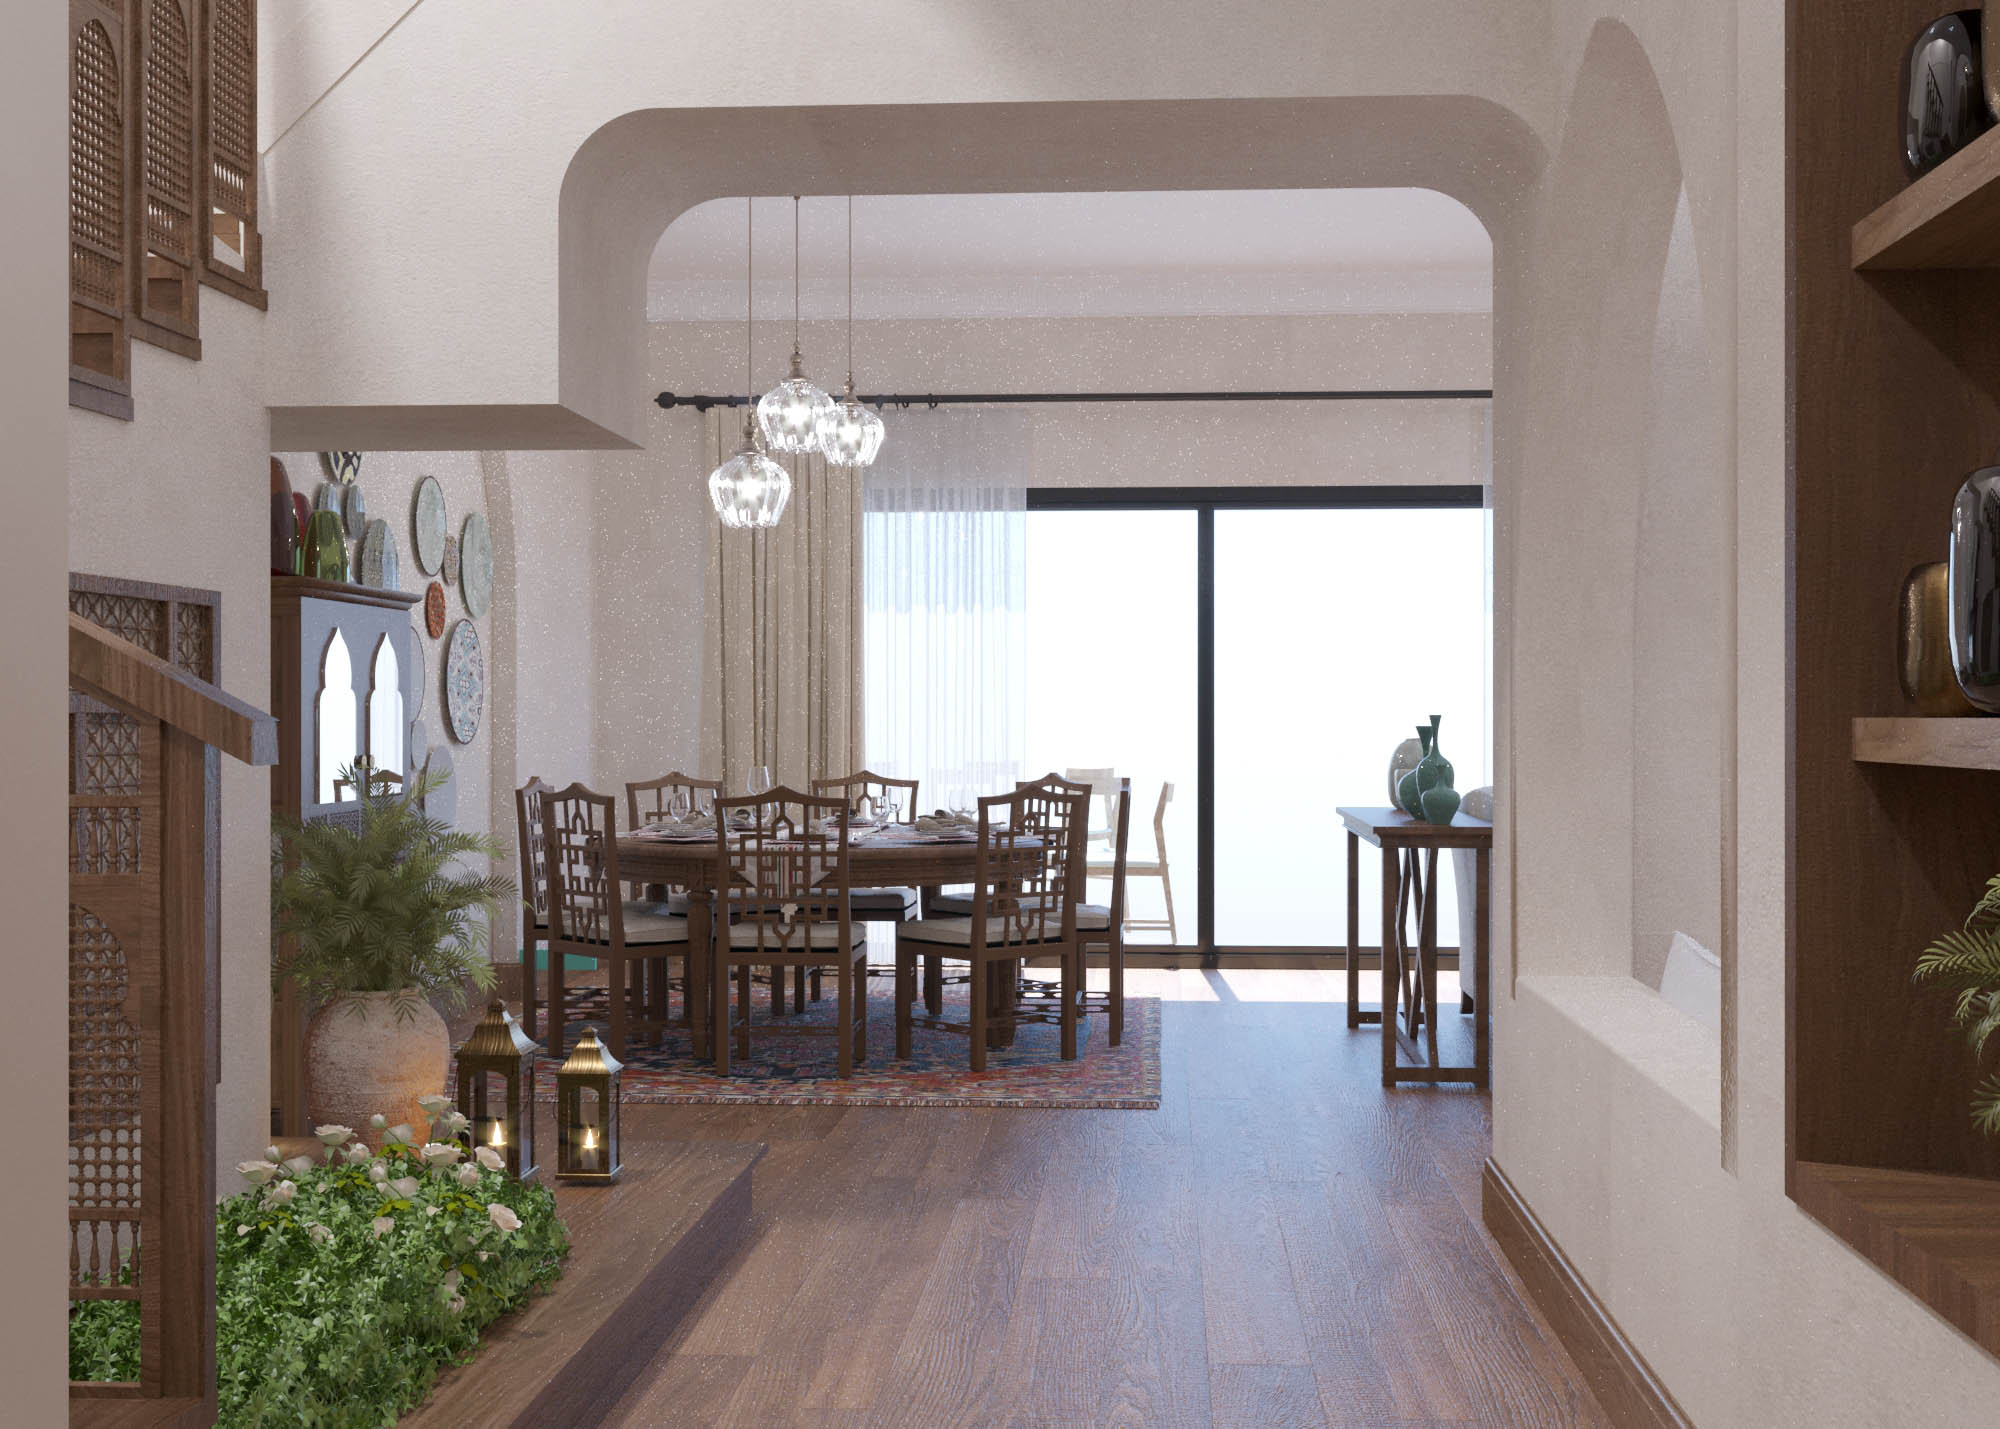 Ground Floor - Reception & Dining